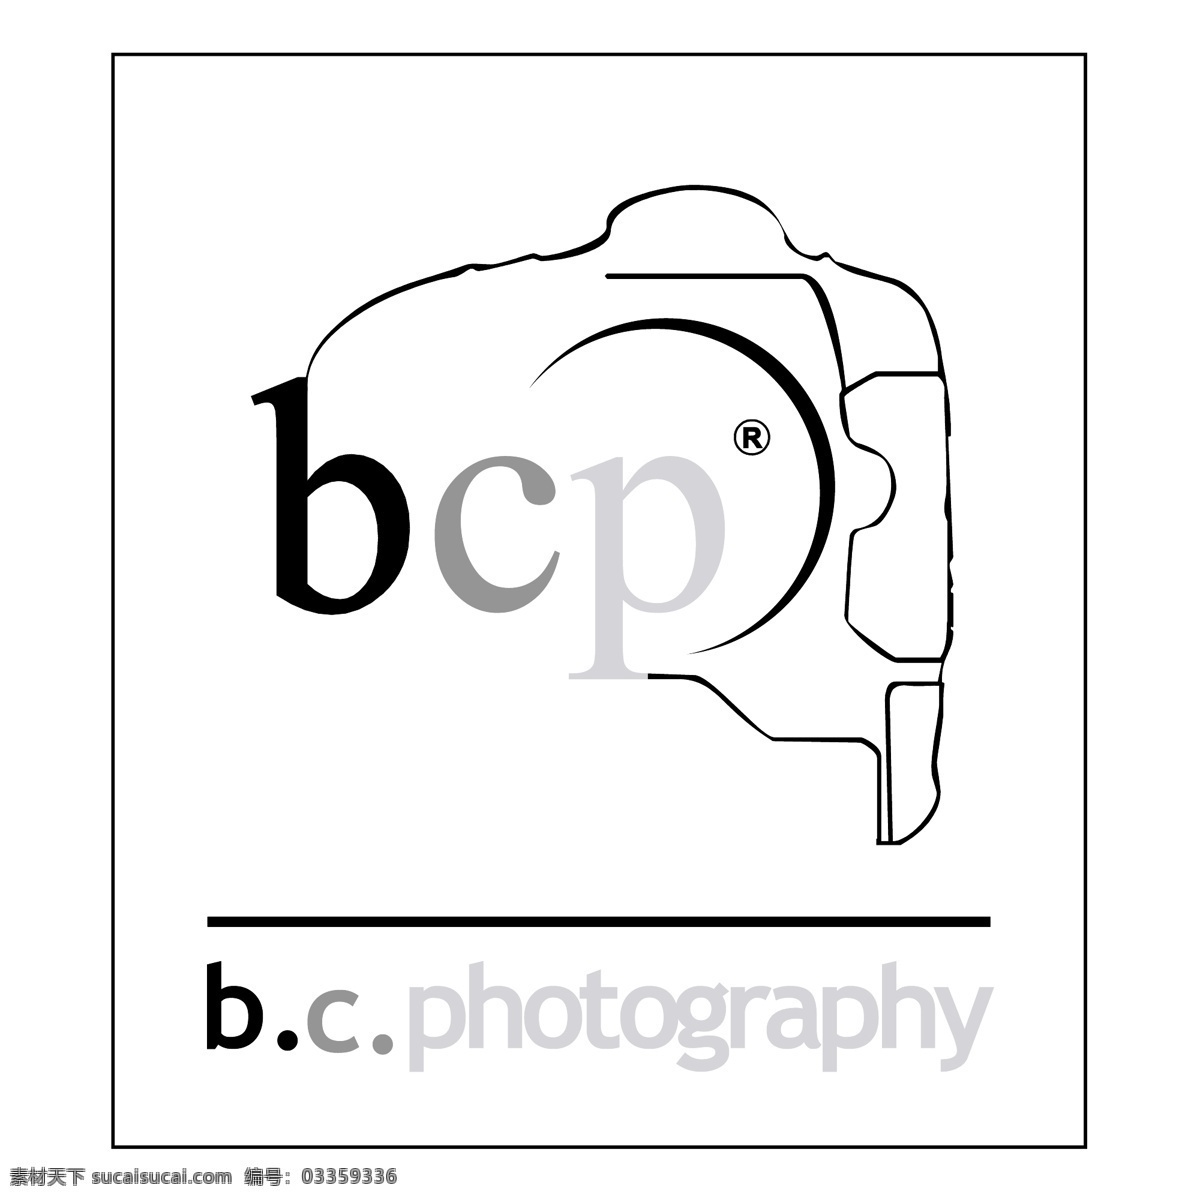 b c摄影 自由 c photography 标识 白色